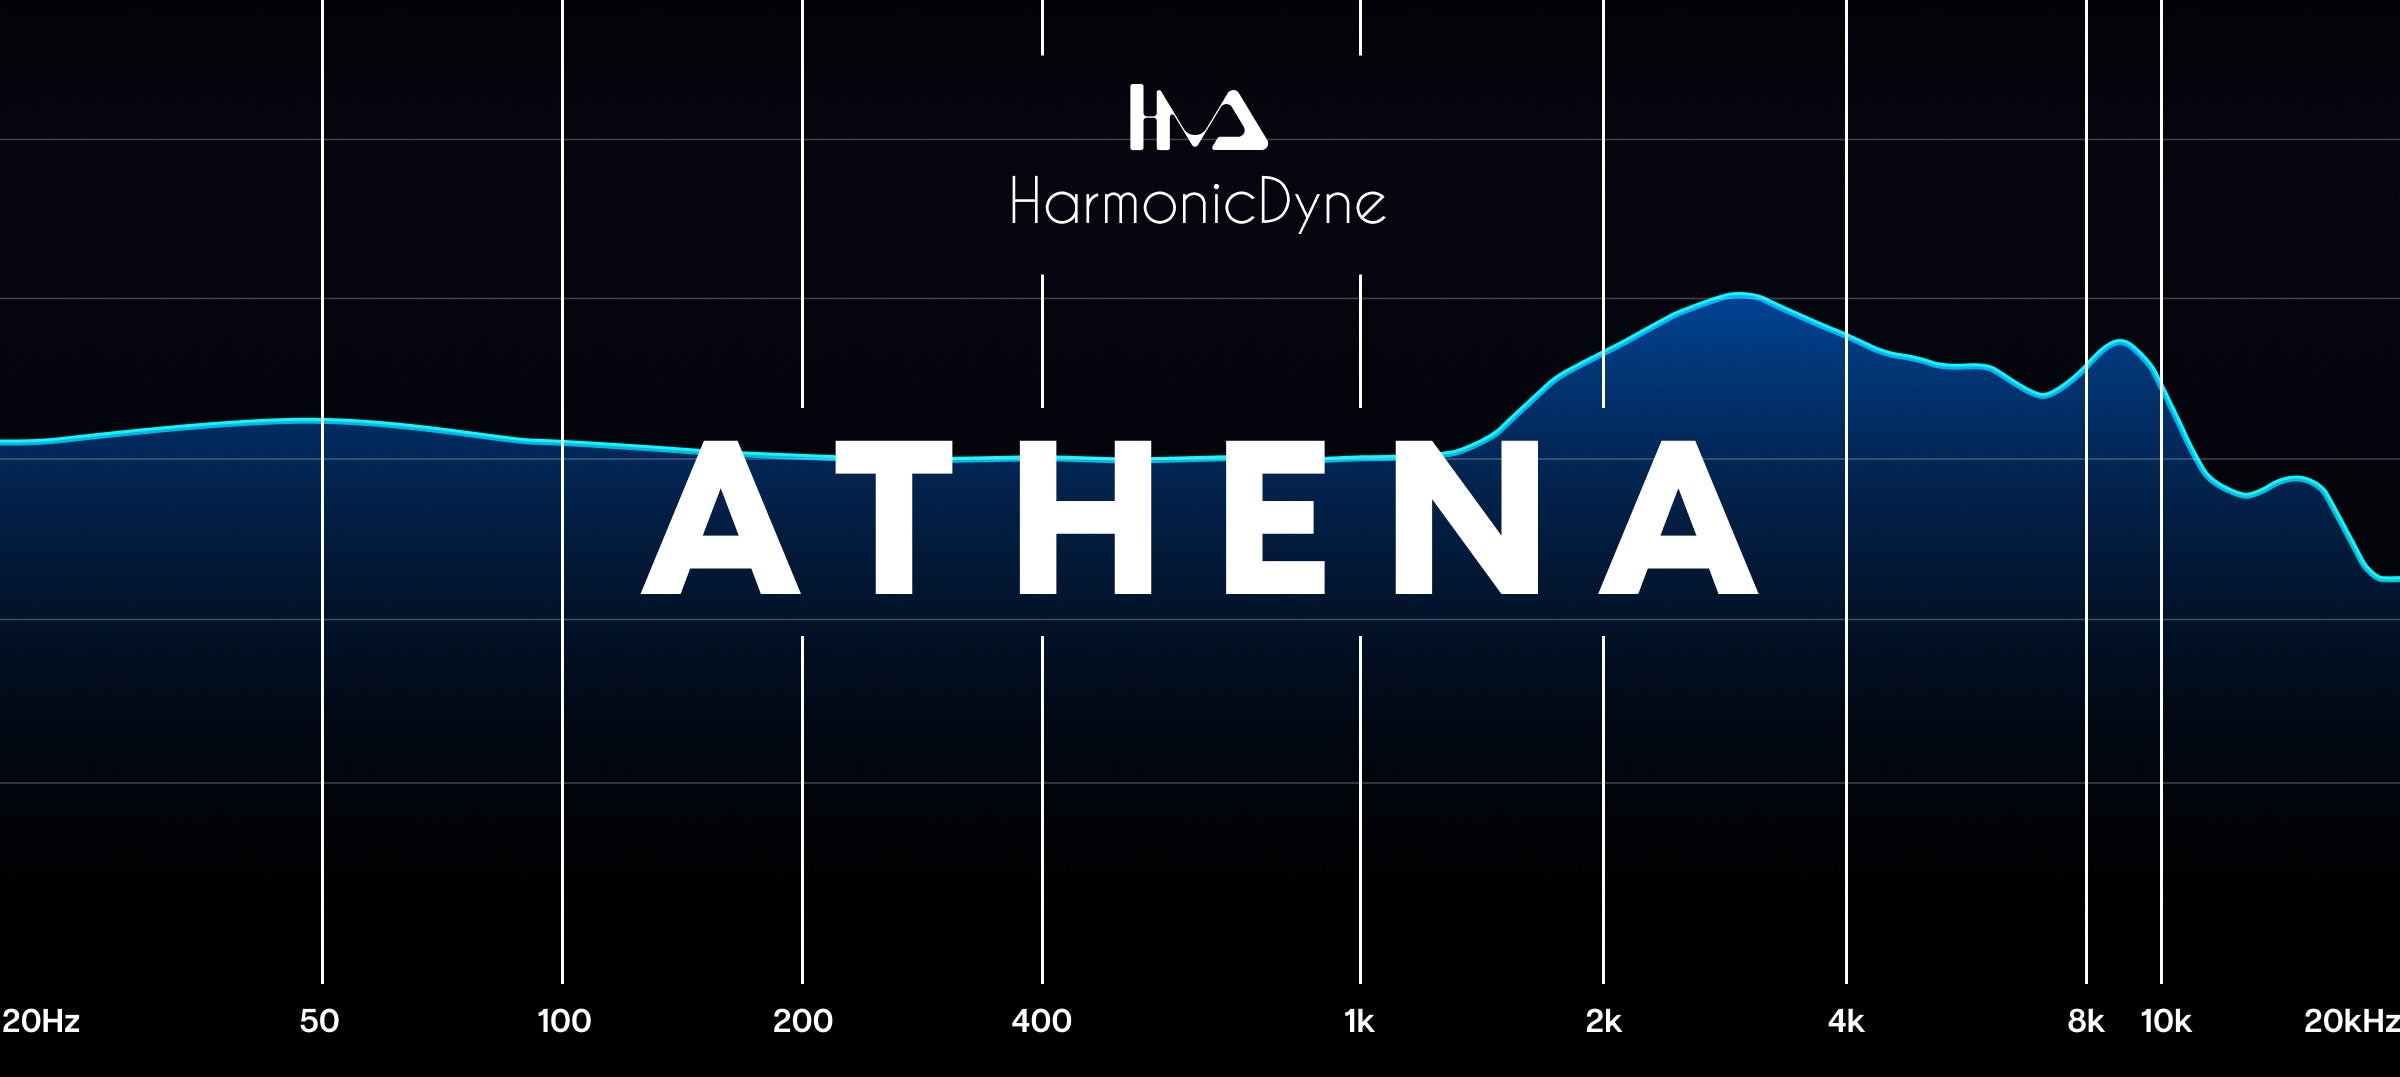 harmonicdyne-athena_c26f01c0-640b-4250-ad23-003bc8d08156.jpg